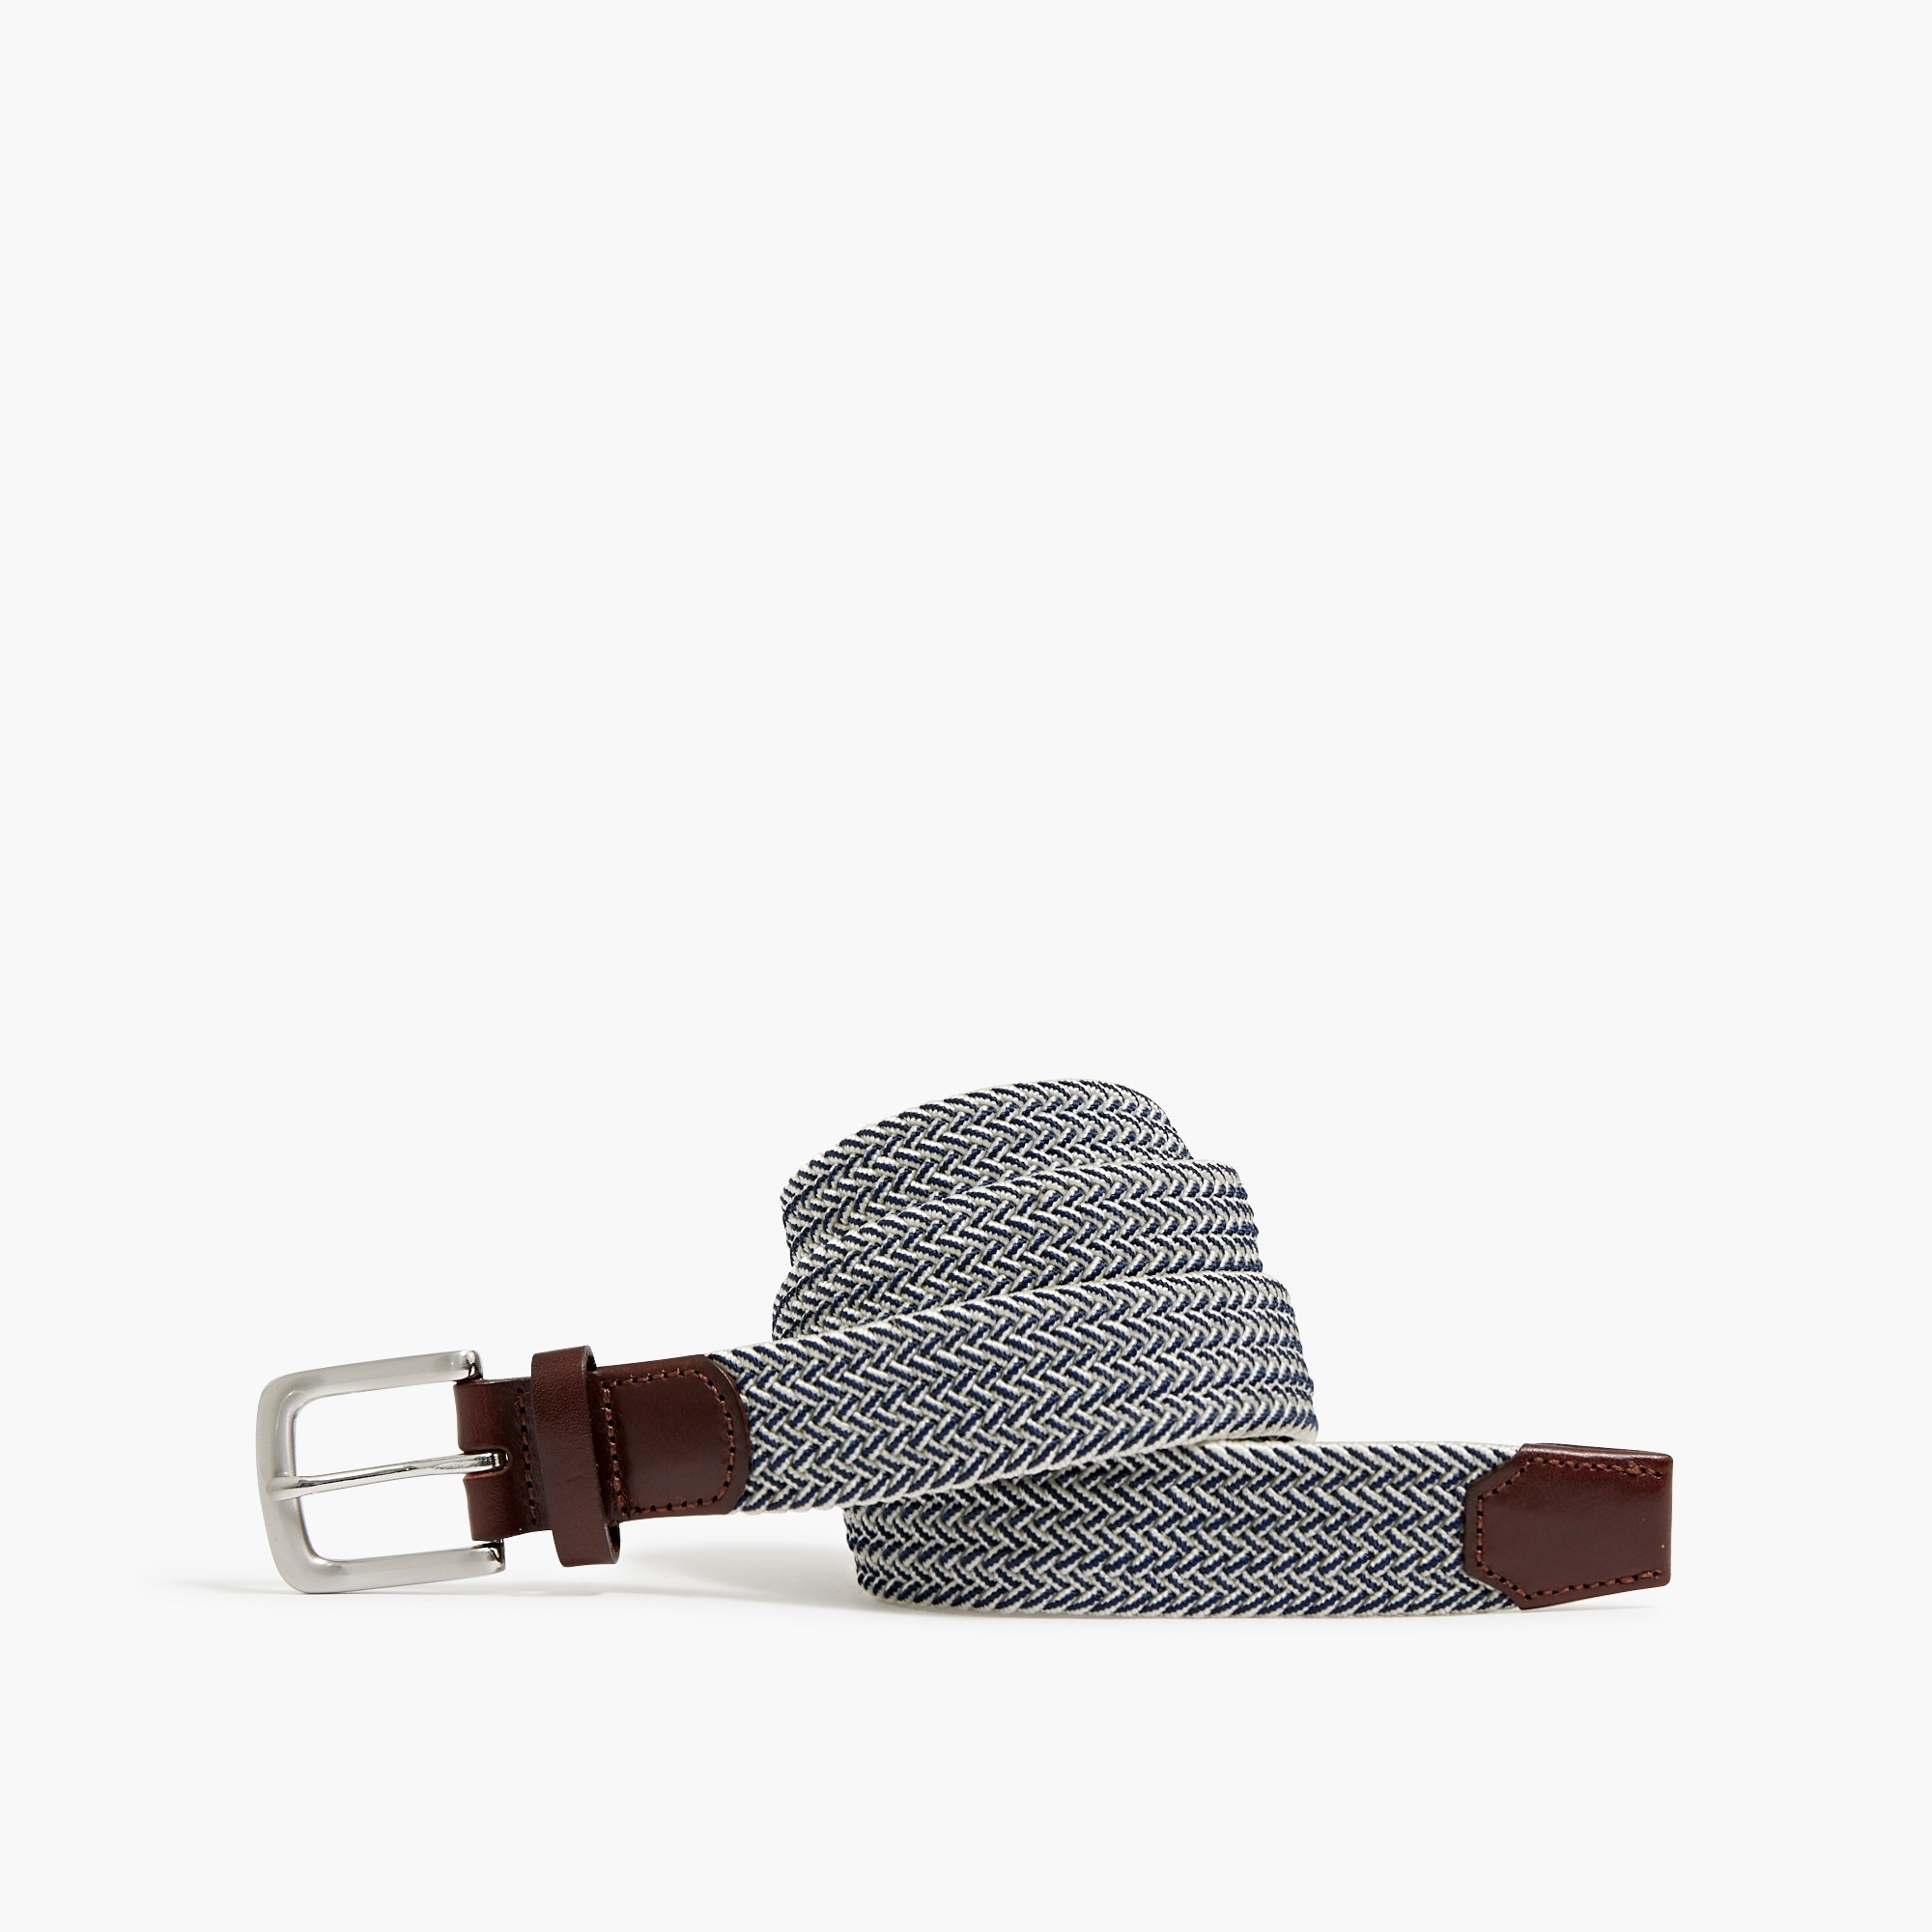 Rope belt